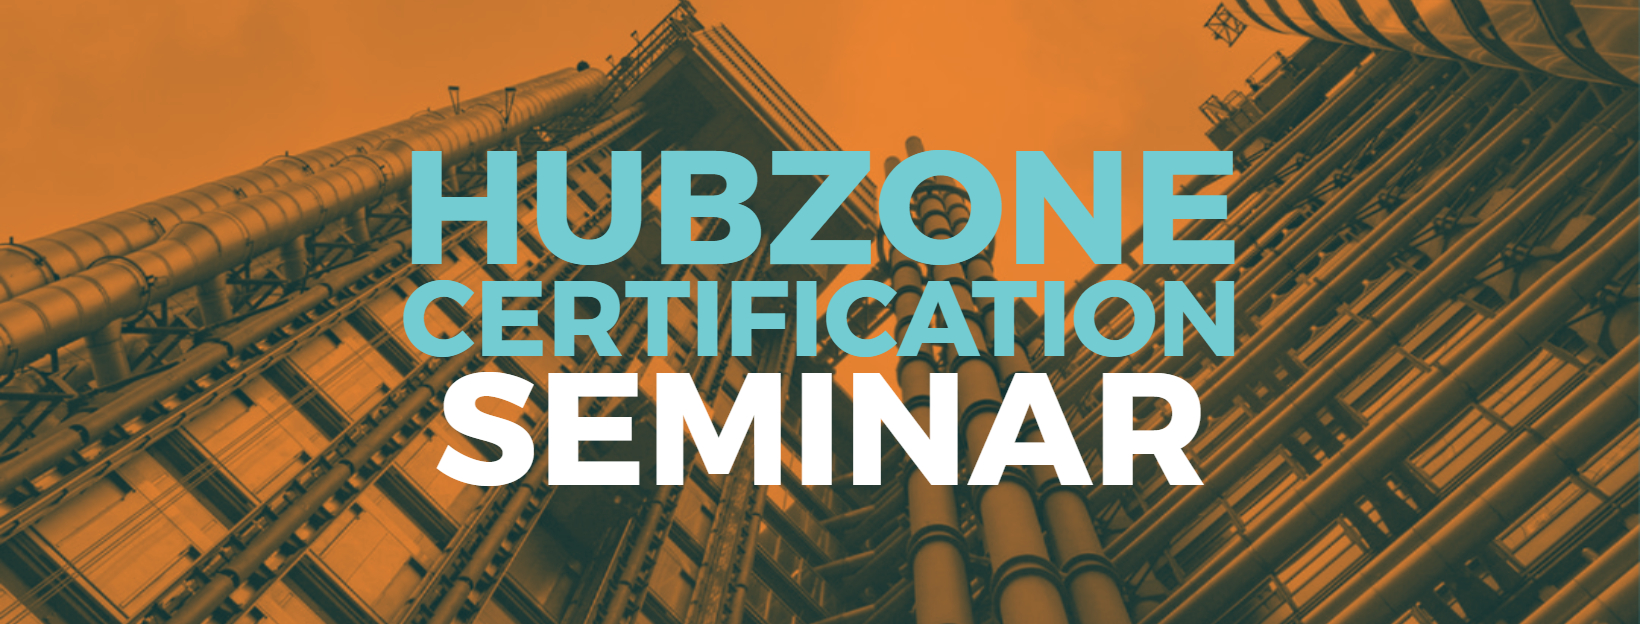 HUBZone Certification Seminar